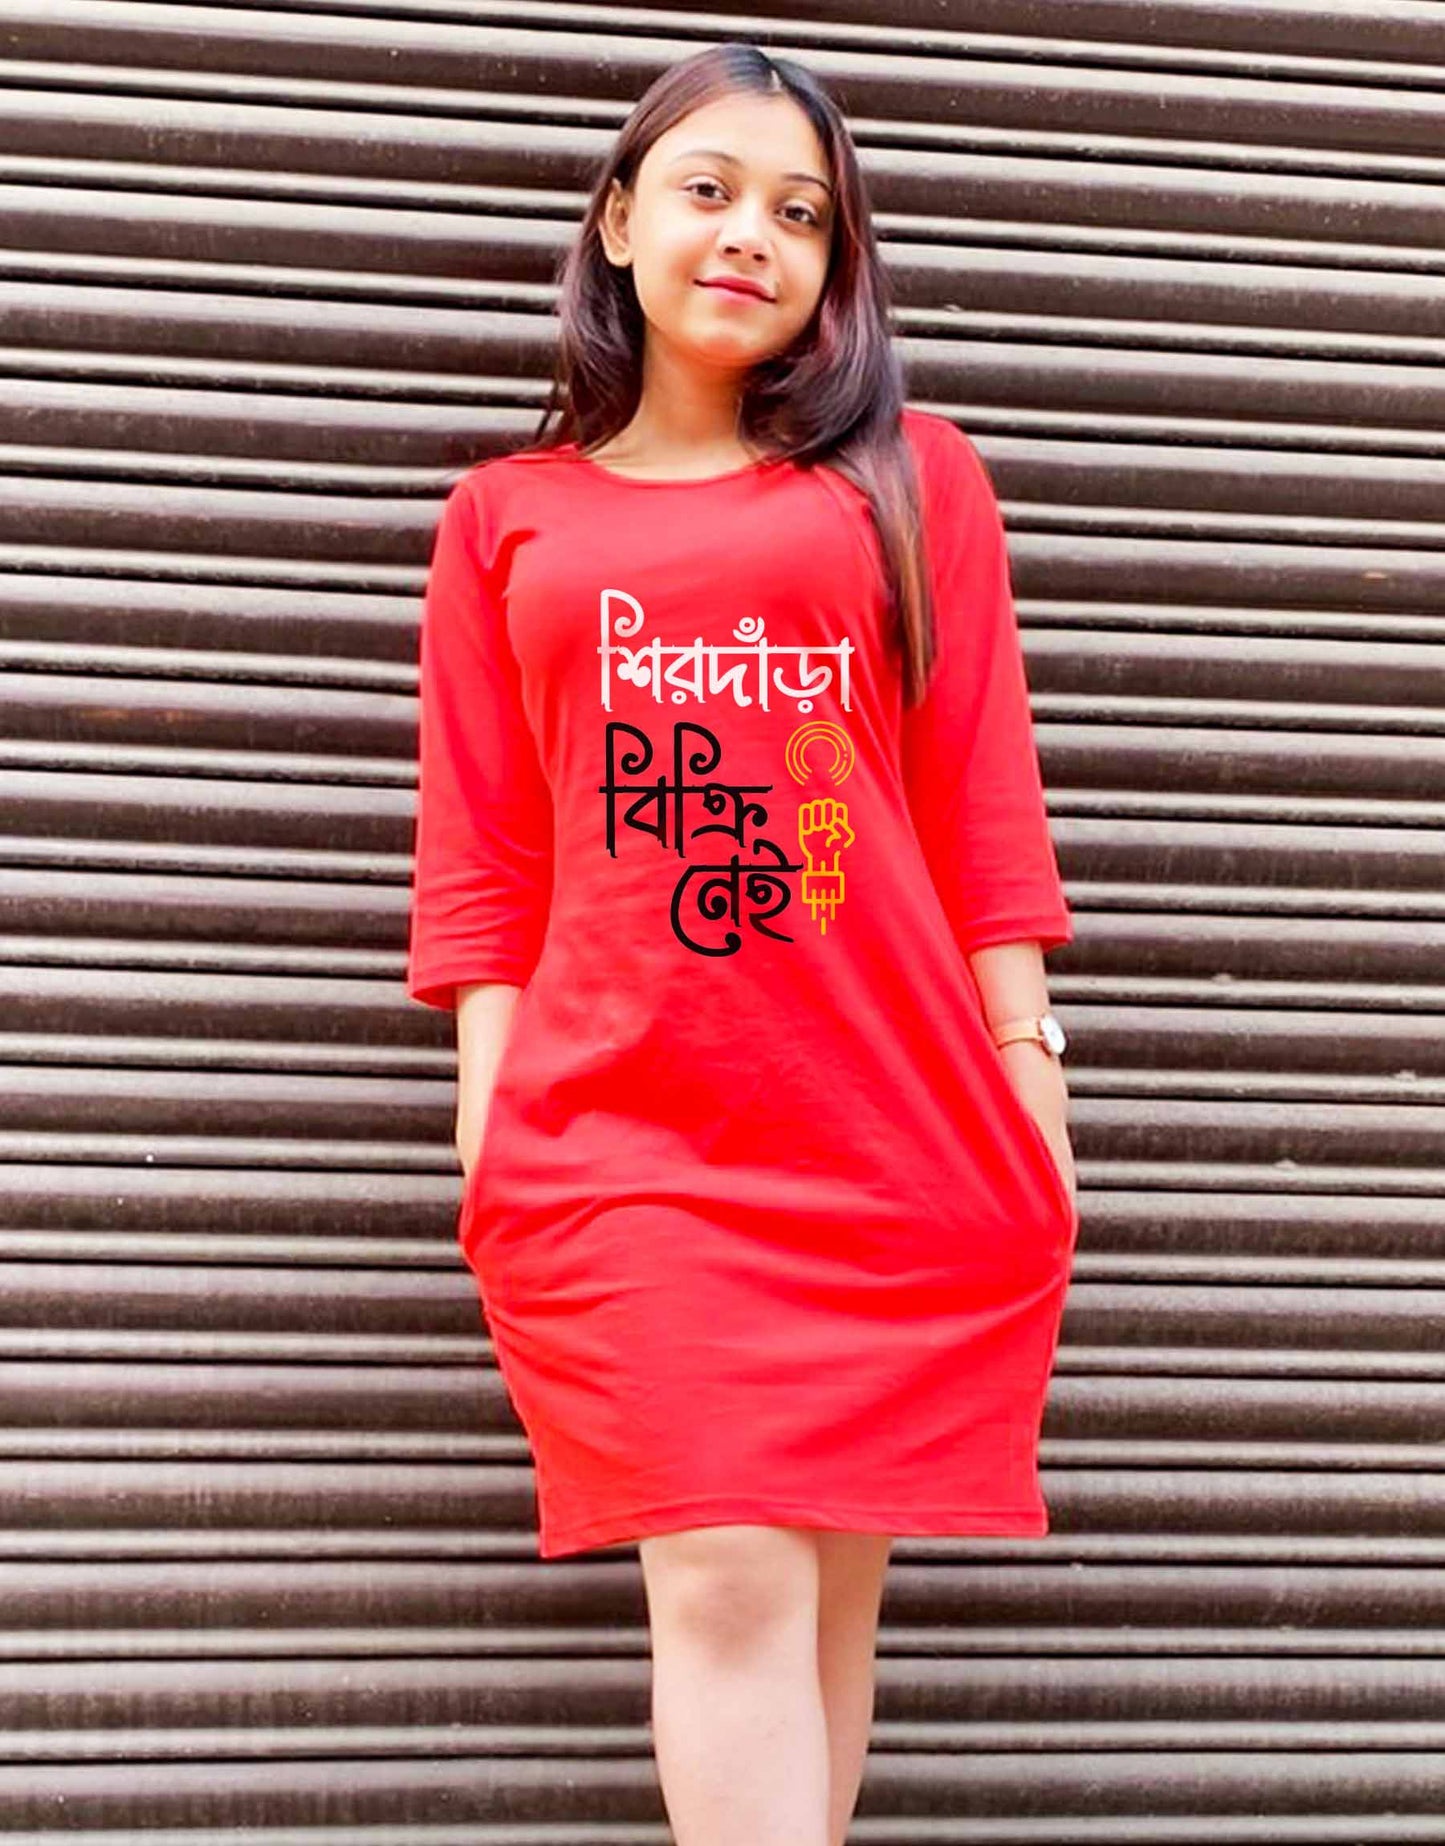 Female Dress - Sirdara Bikkri nei - 699.00 - TEEGURUJI - Free Shipping